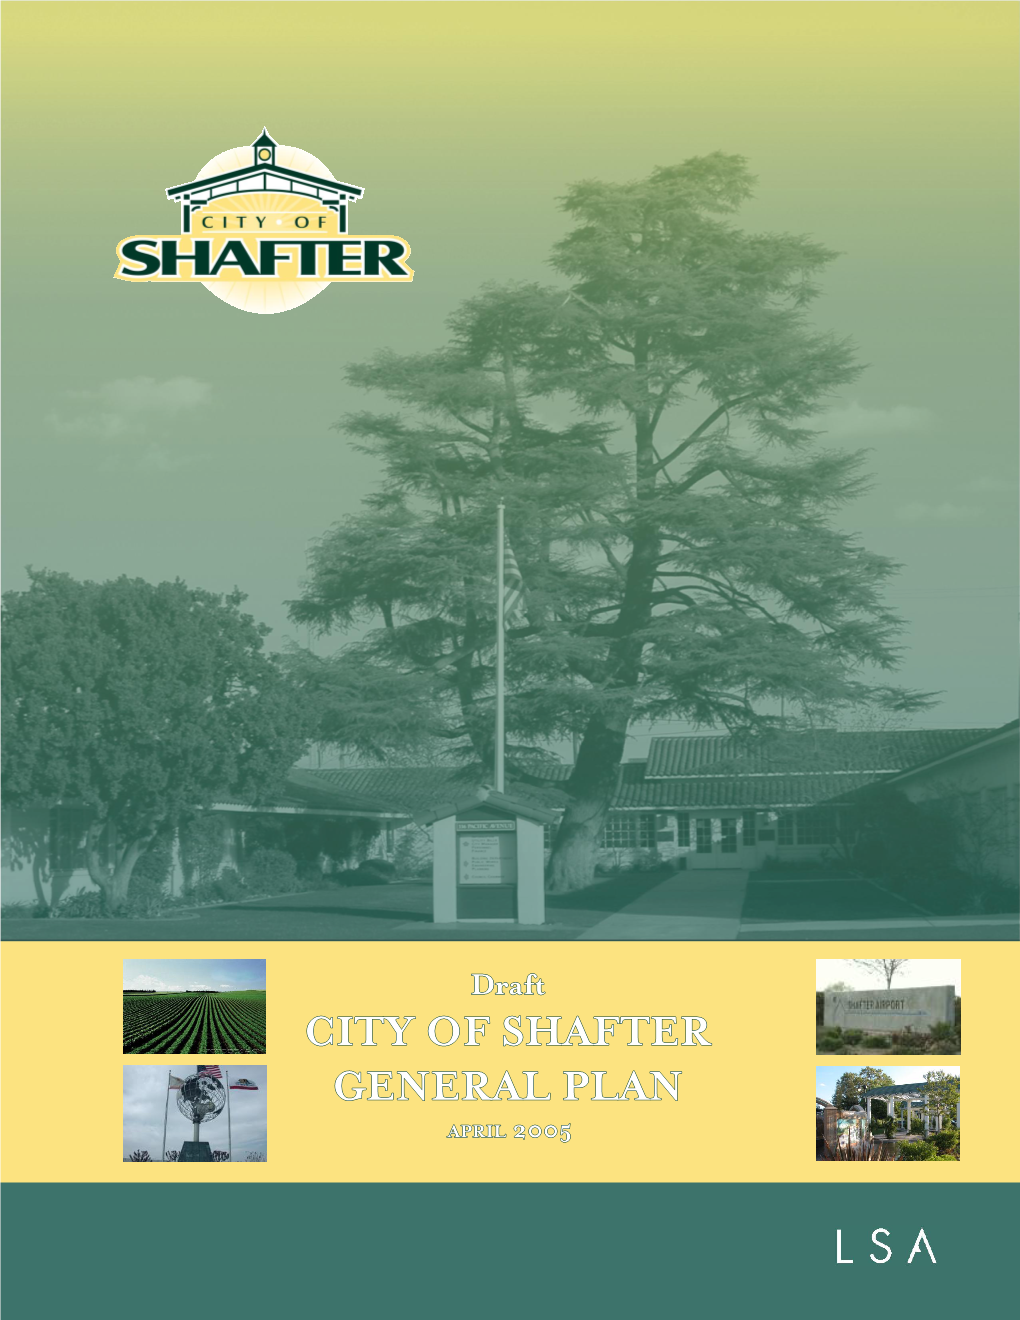 City of Shafter General Plan April 2005